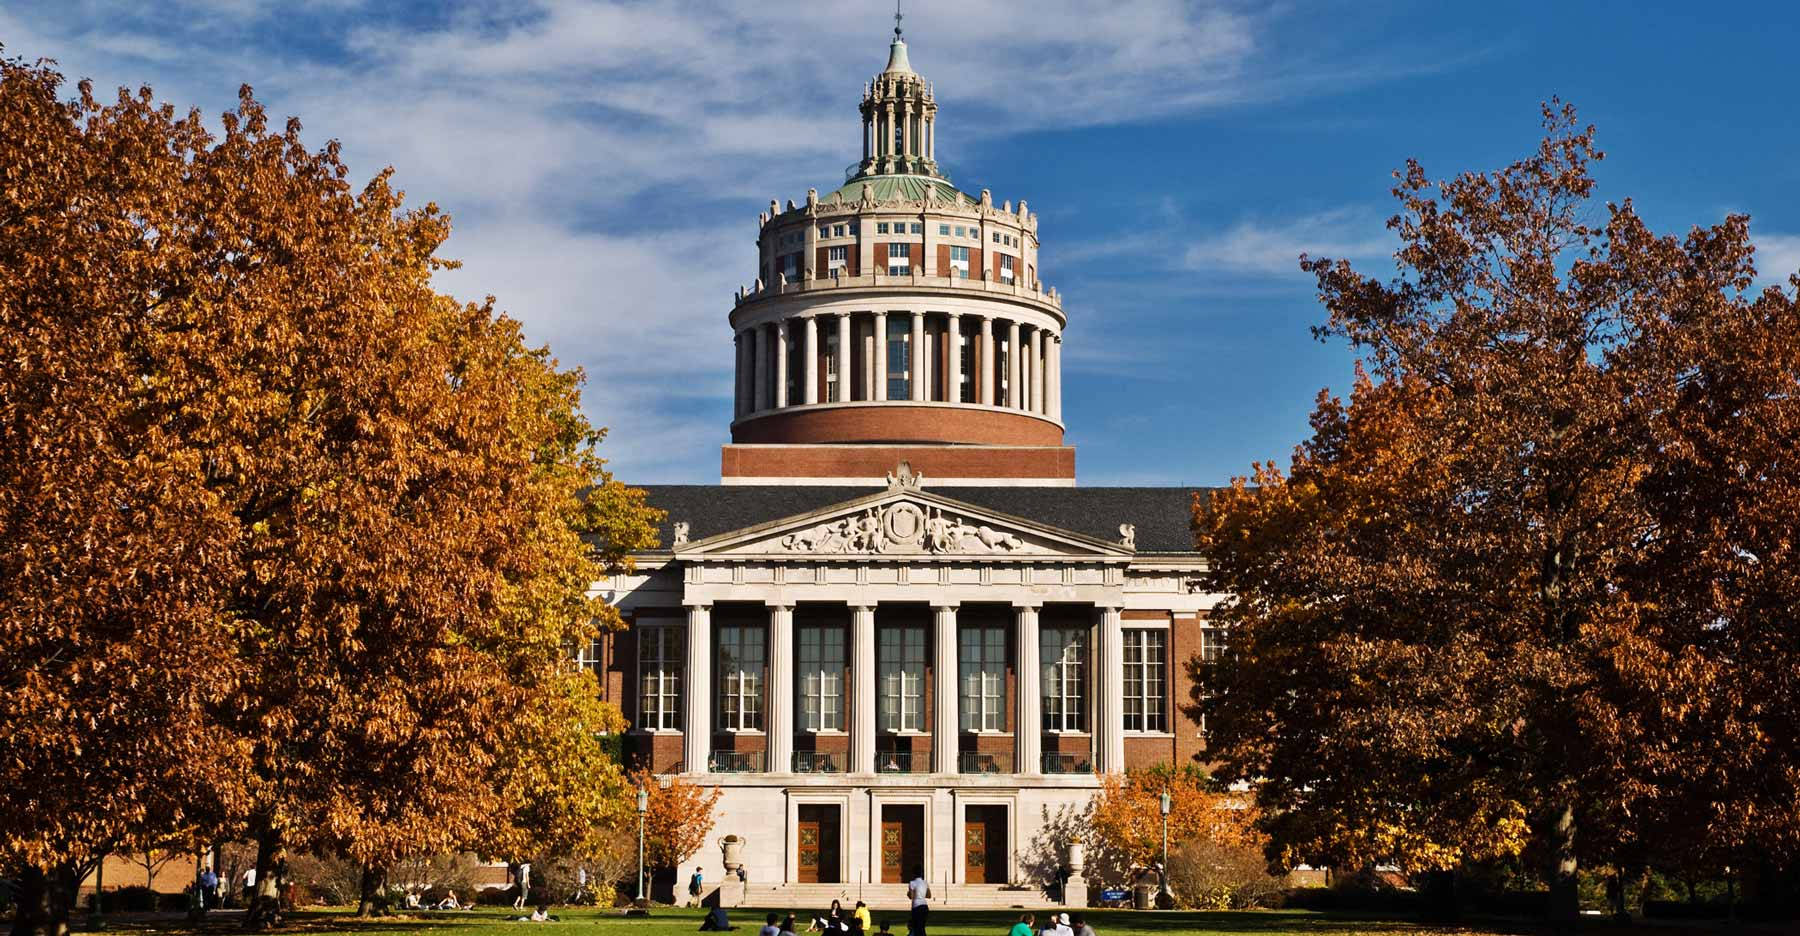 University Of Rochester Building Autumn Wallpaper